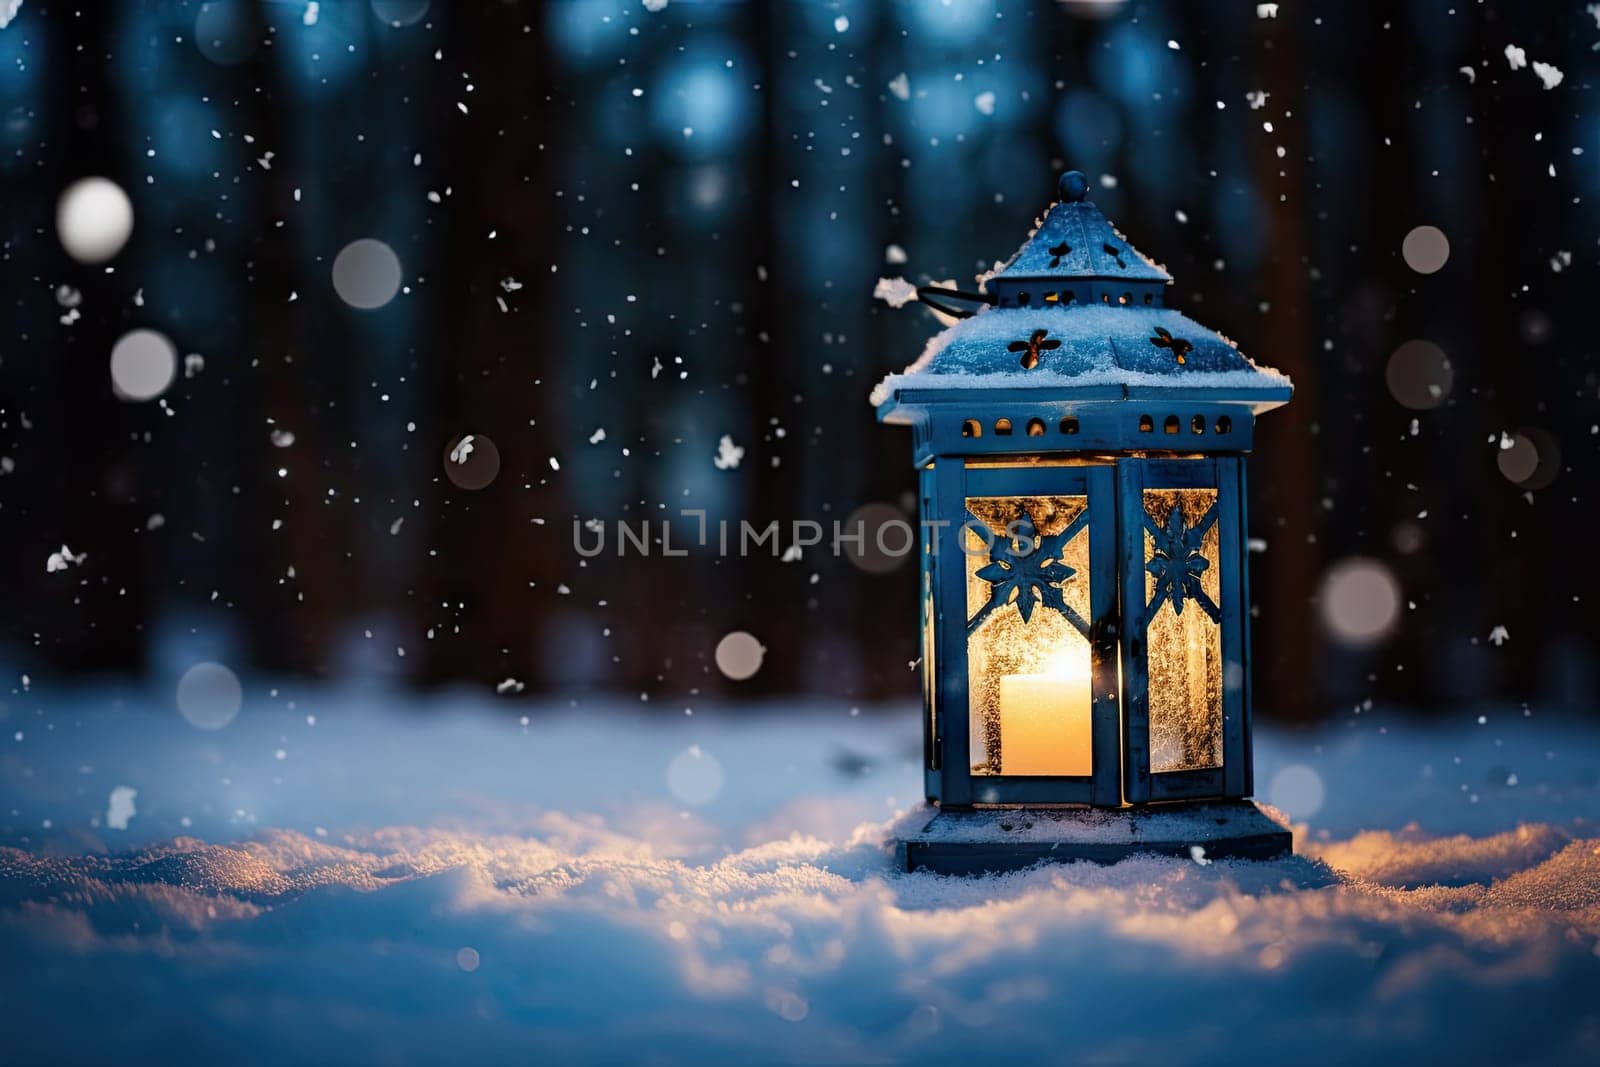 A Serene Winter Night: Illuminated Lantern Casting Warm Glow on Snowy Landscape Created With Generative AI Technology